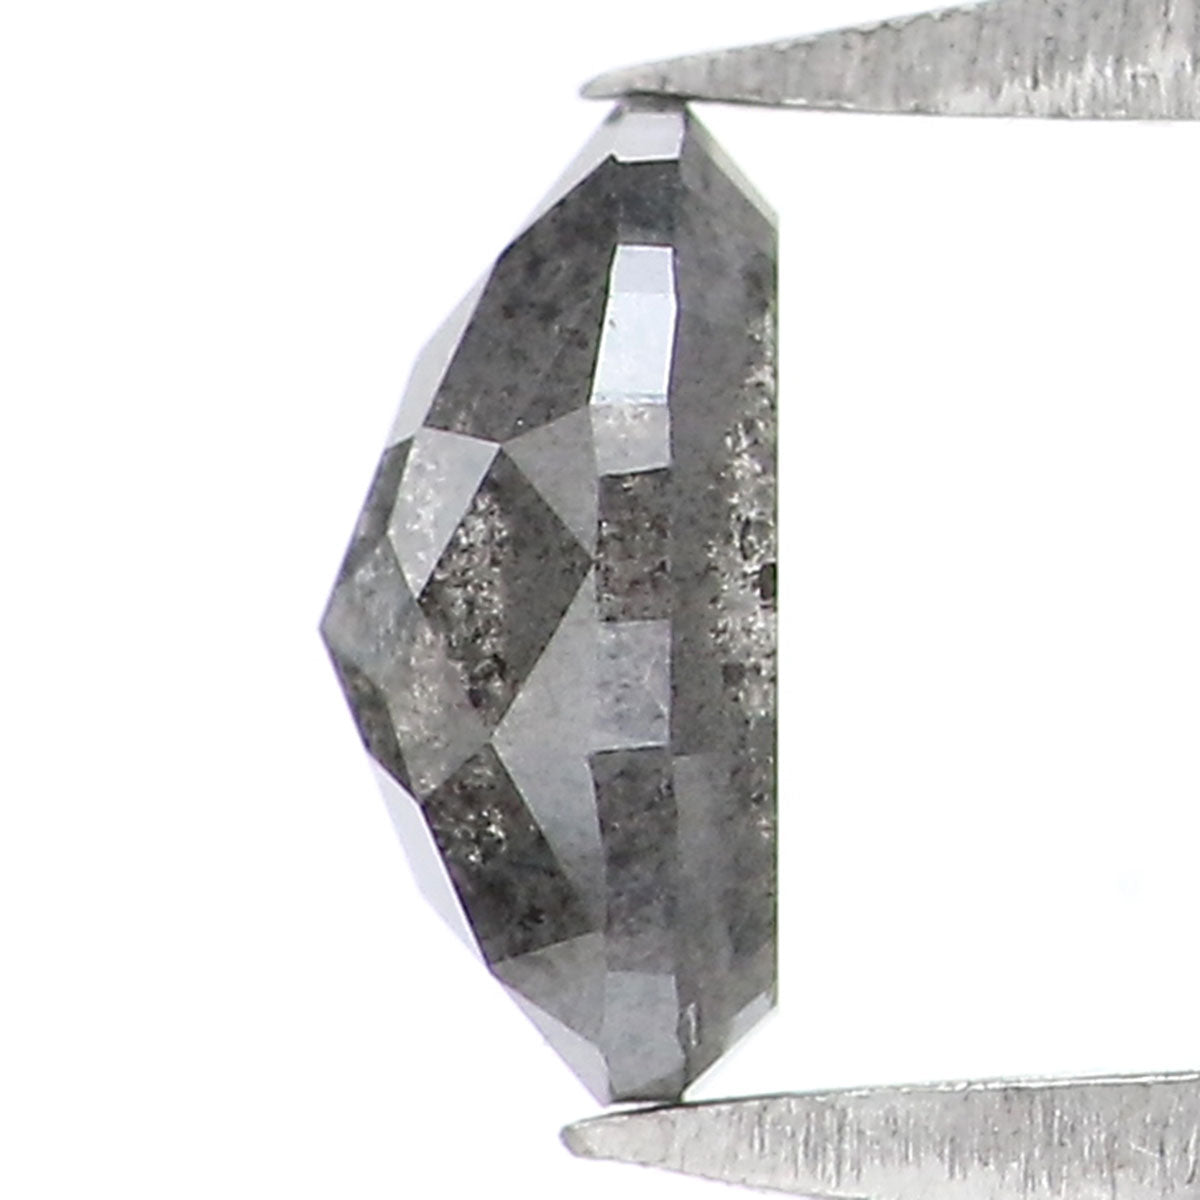 0.39 CT Natural Loose Oval Shape Diamond Salt And Pepper Oval Shape Diamond 5.25 MM Natural Black Grey Color Oval Rose Cut Diamond QL2466